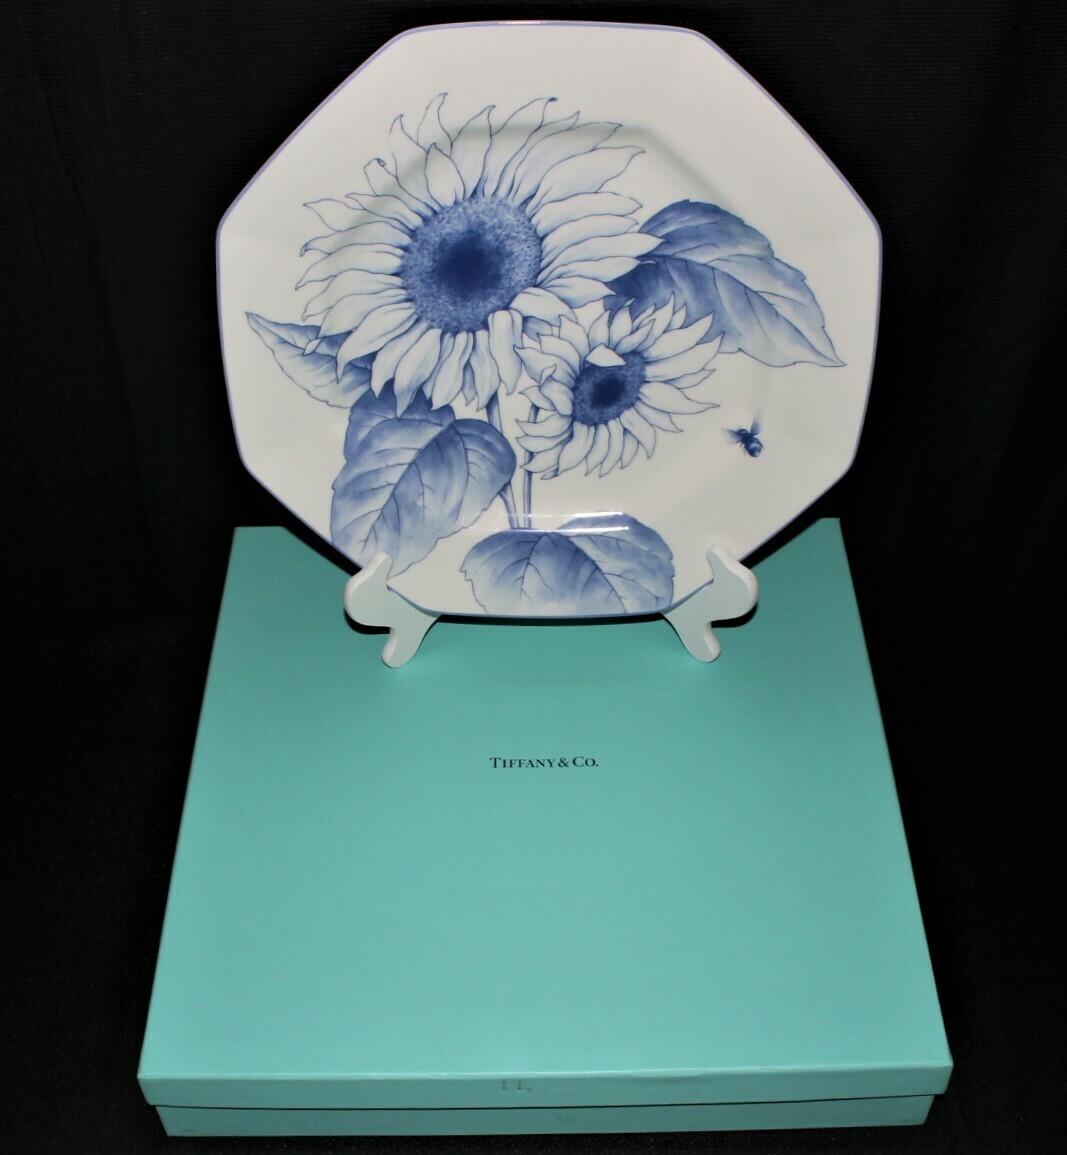 TIFFANY & CO “Nature” 13” Octagonal Sunflower Serving Platter in Original Box